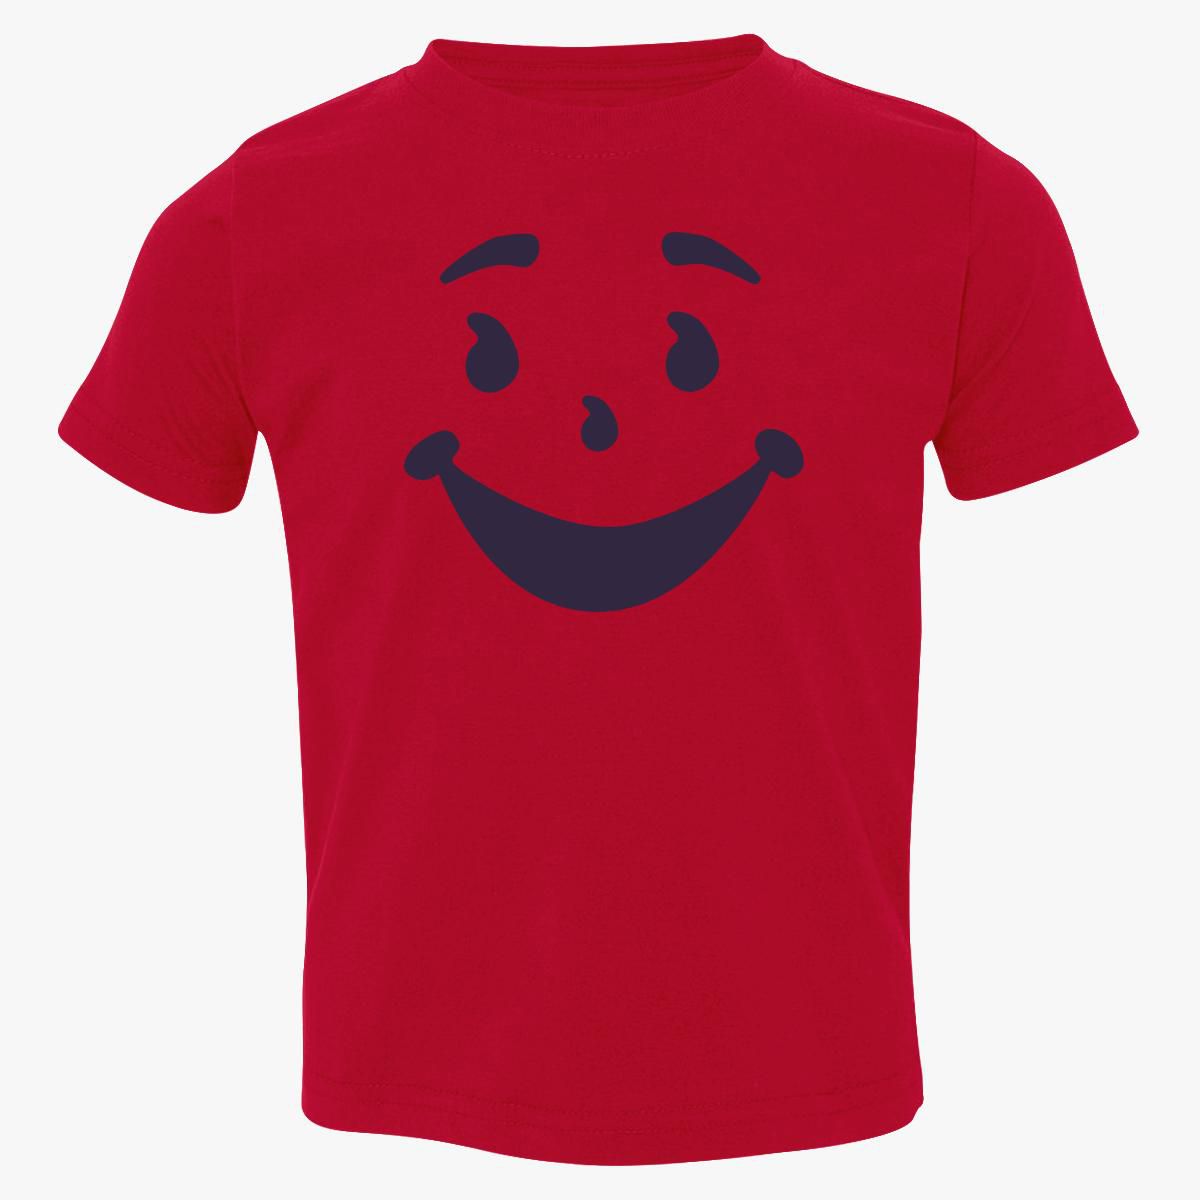 kool-aid man Face Toddler T-shirt - Customon
 Kool Aid Shirt